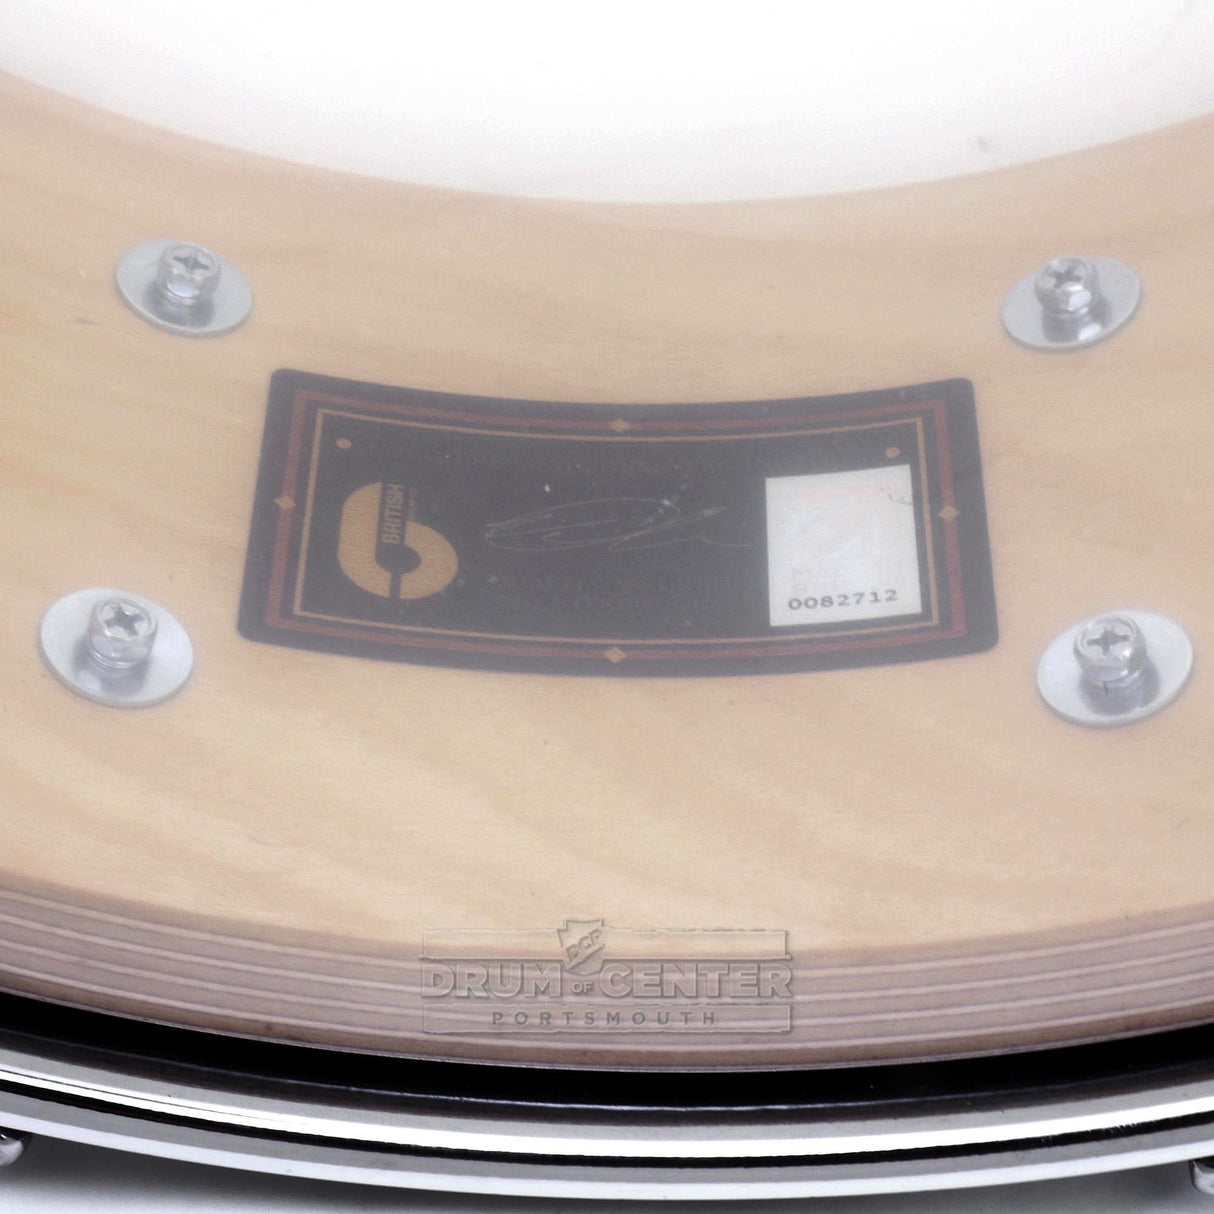 British Drum Company Merlin Snare Drum 14x5.5